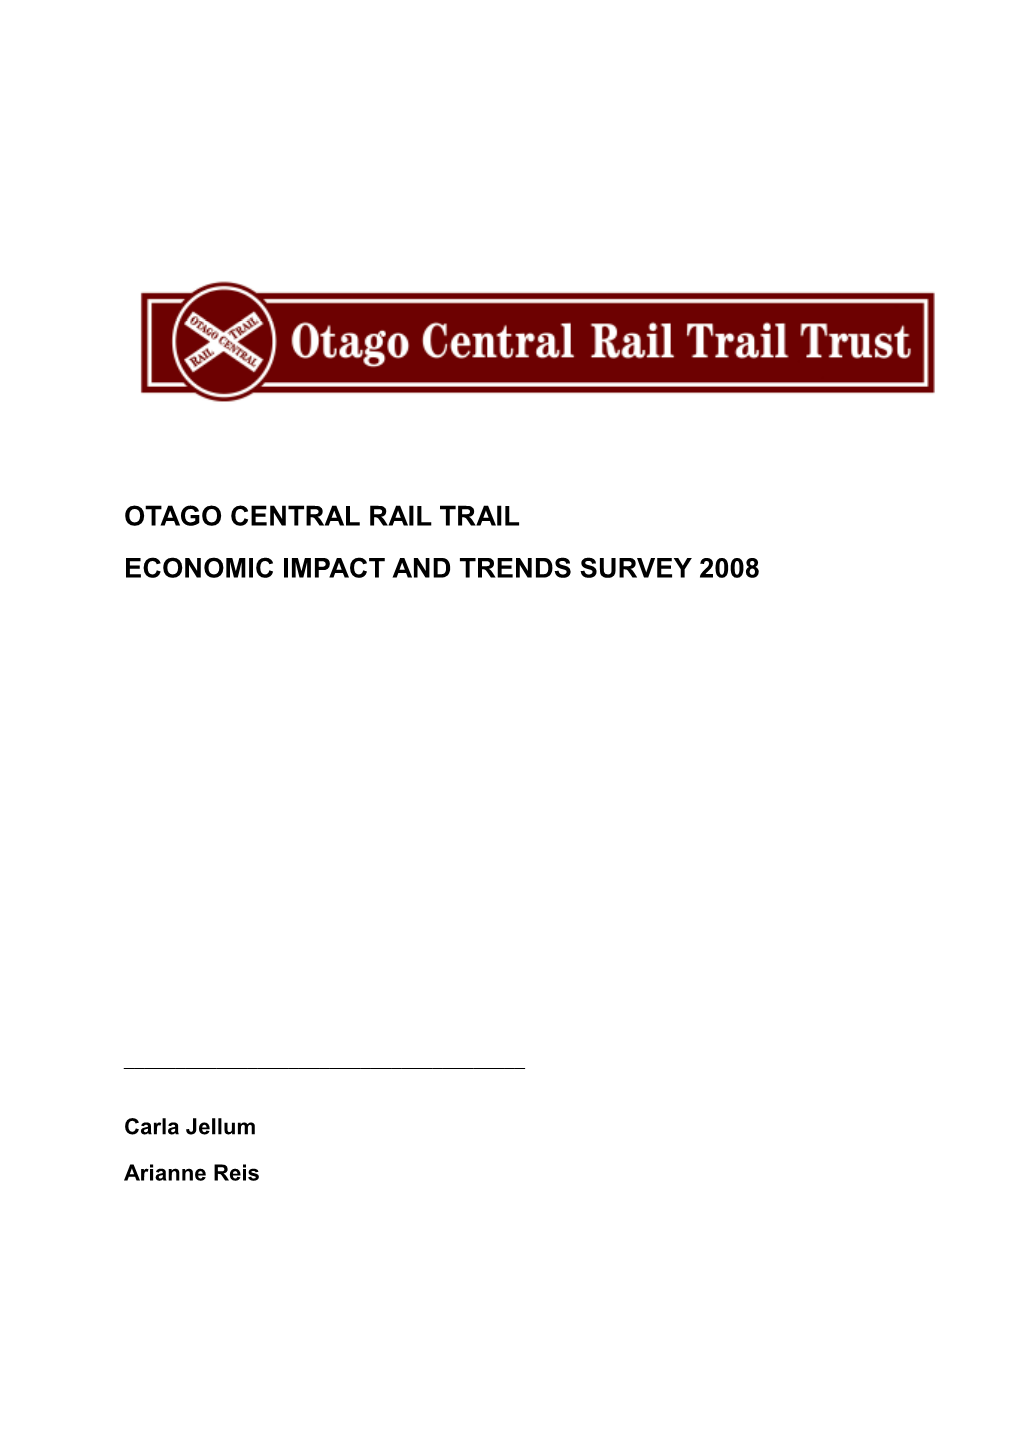 Otago Central Rail Trail Economic Impact and Trends Survey 2008